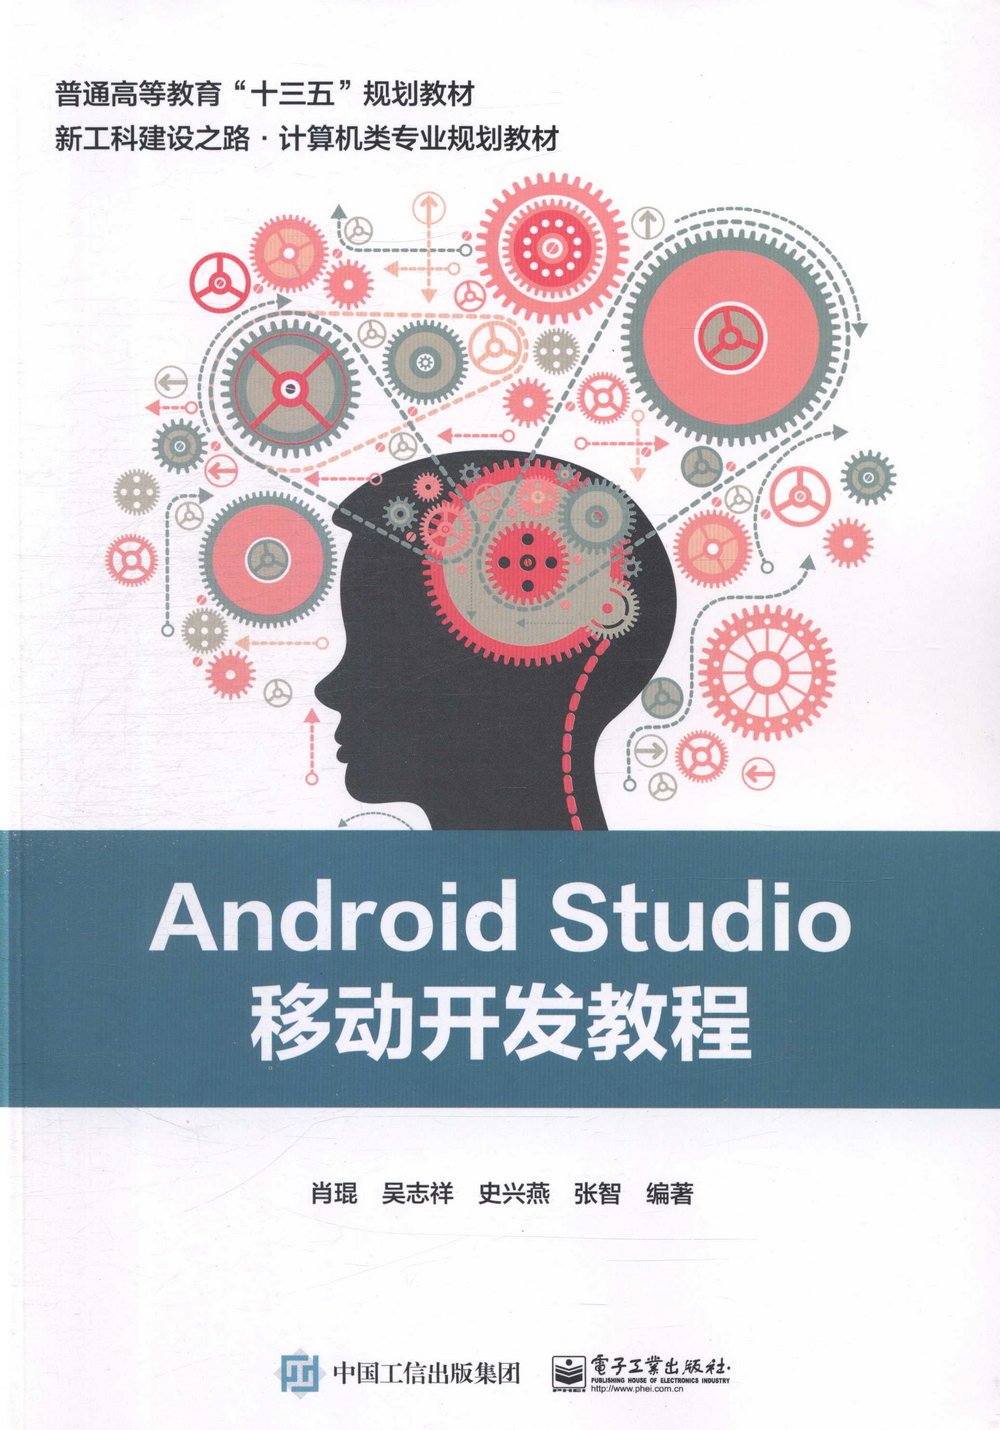 Android Studio移動開發教程